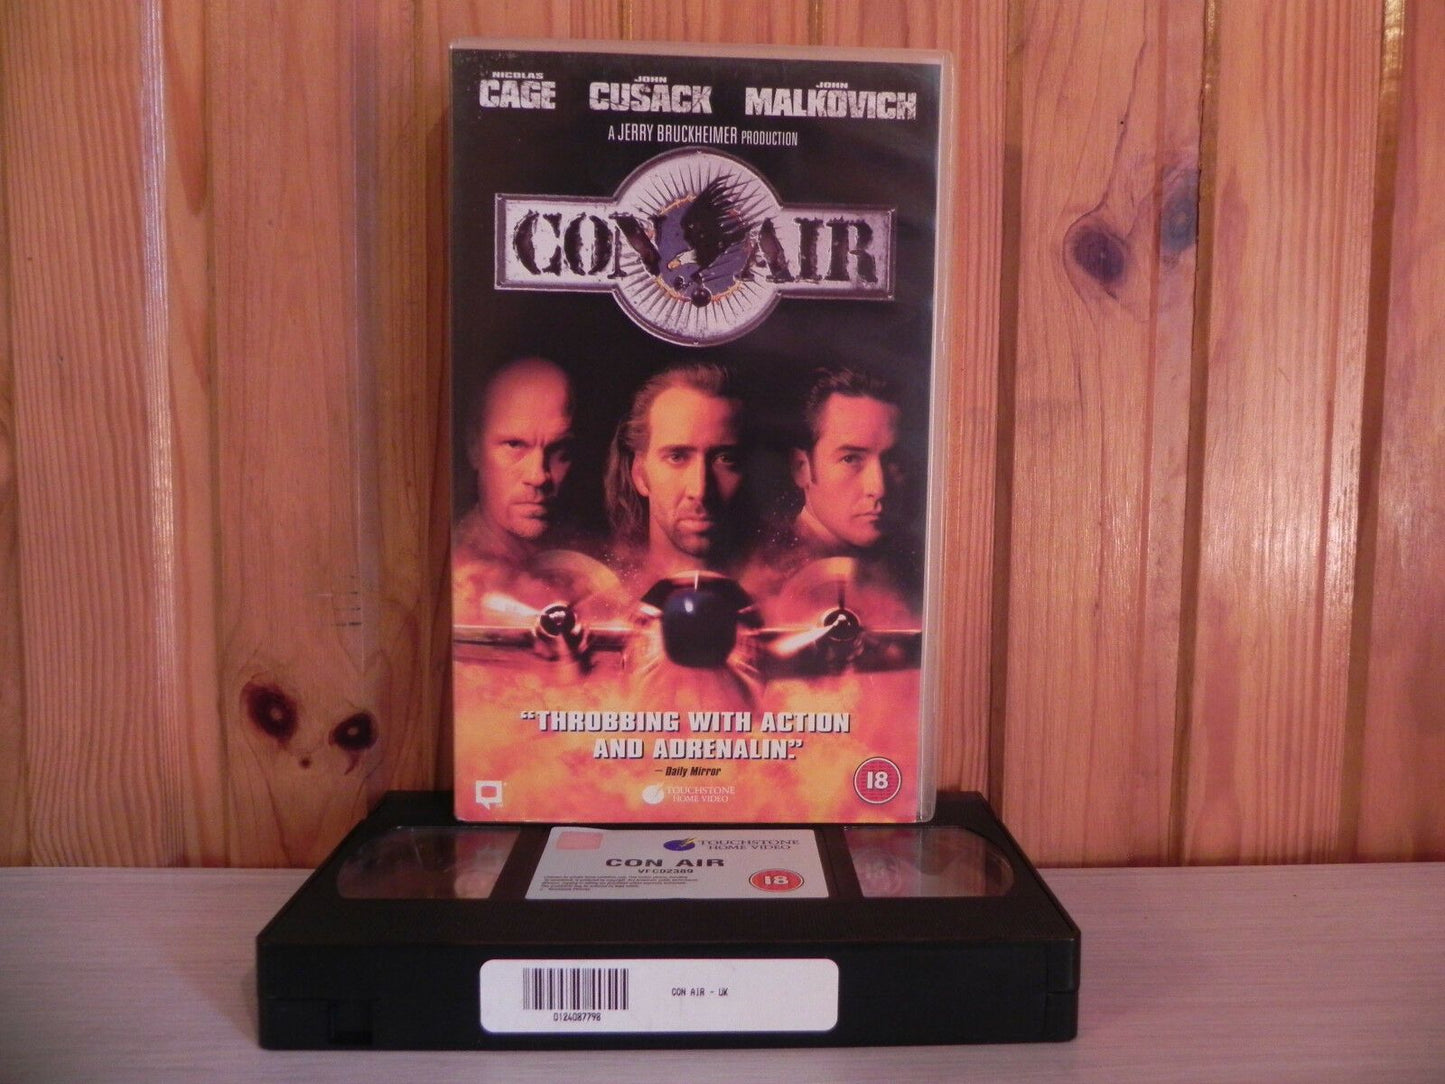 CON AIR - Cage / Cussack / Malkovich - Big Box Action - Ex-Rental Video - VHS-